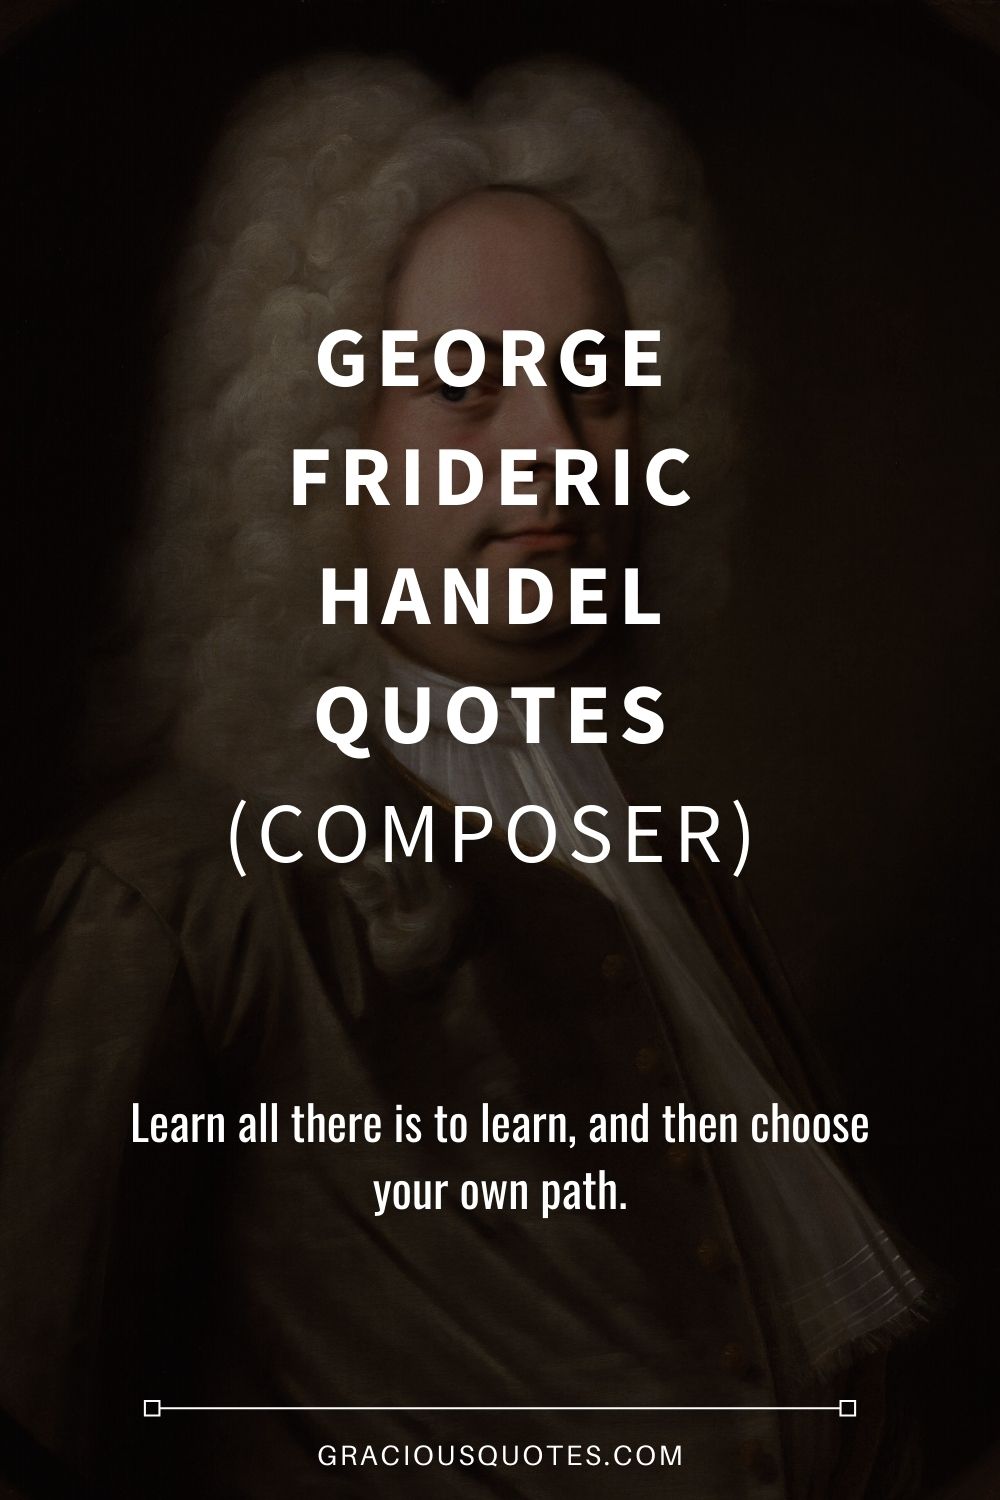 George Frideric Handel Quotes (COMPOSER) - Gracious Quotes